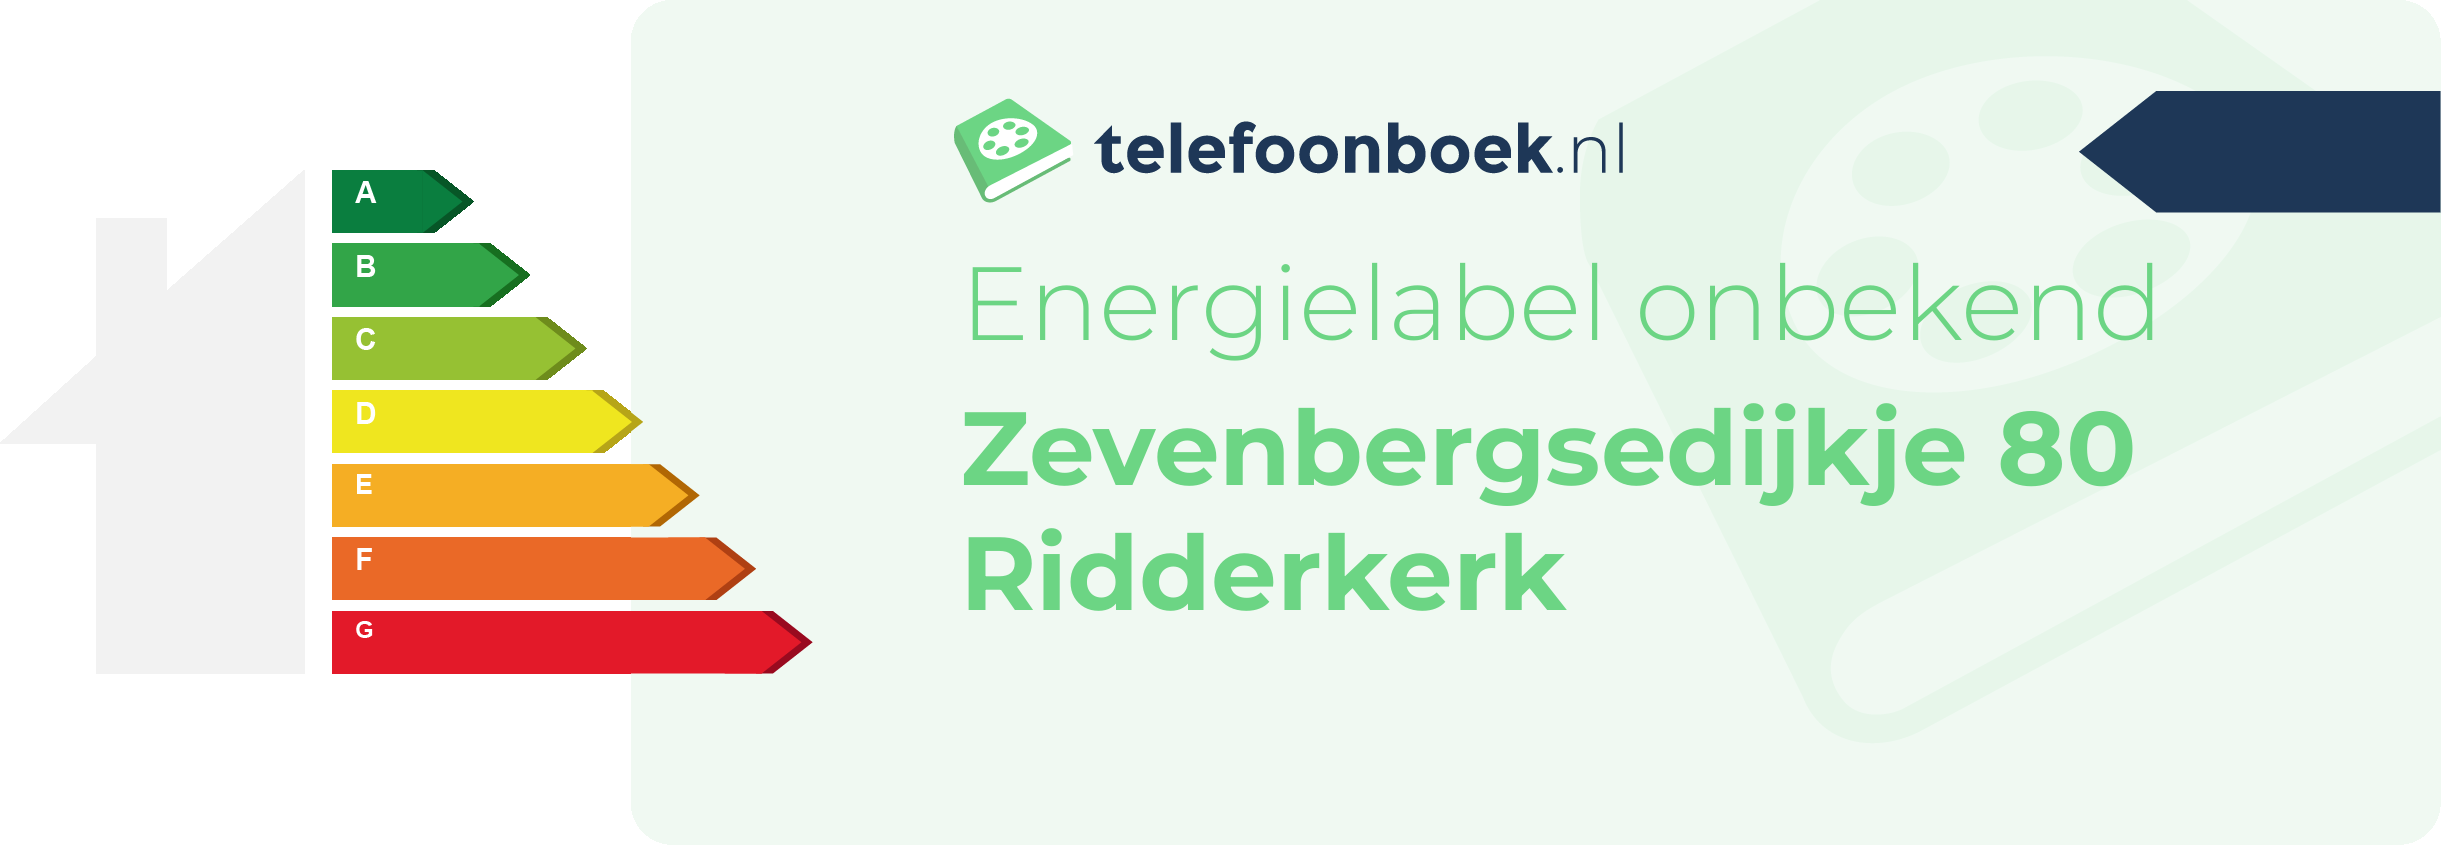 Energielabel Zevenbergsedijkje 80 Ridderkerk